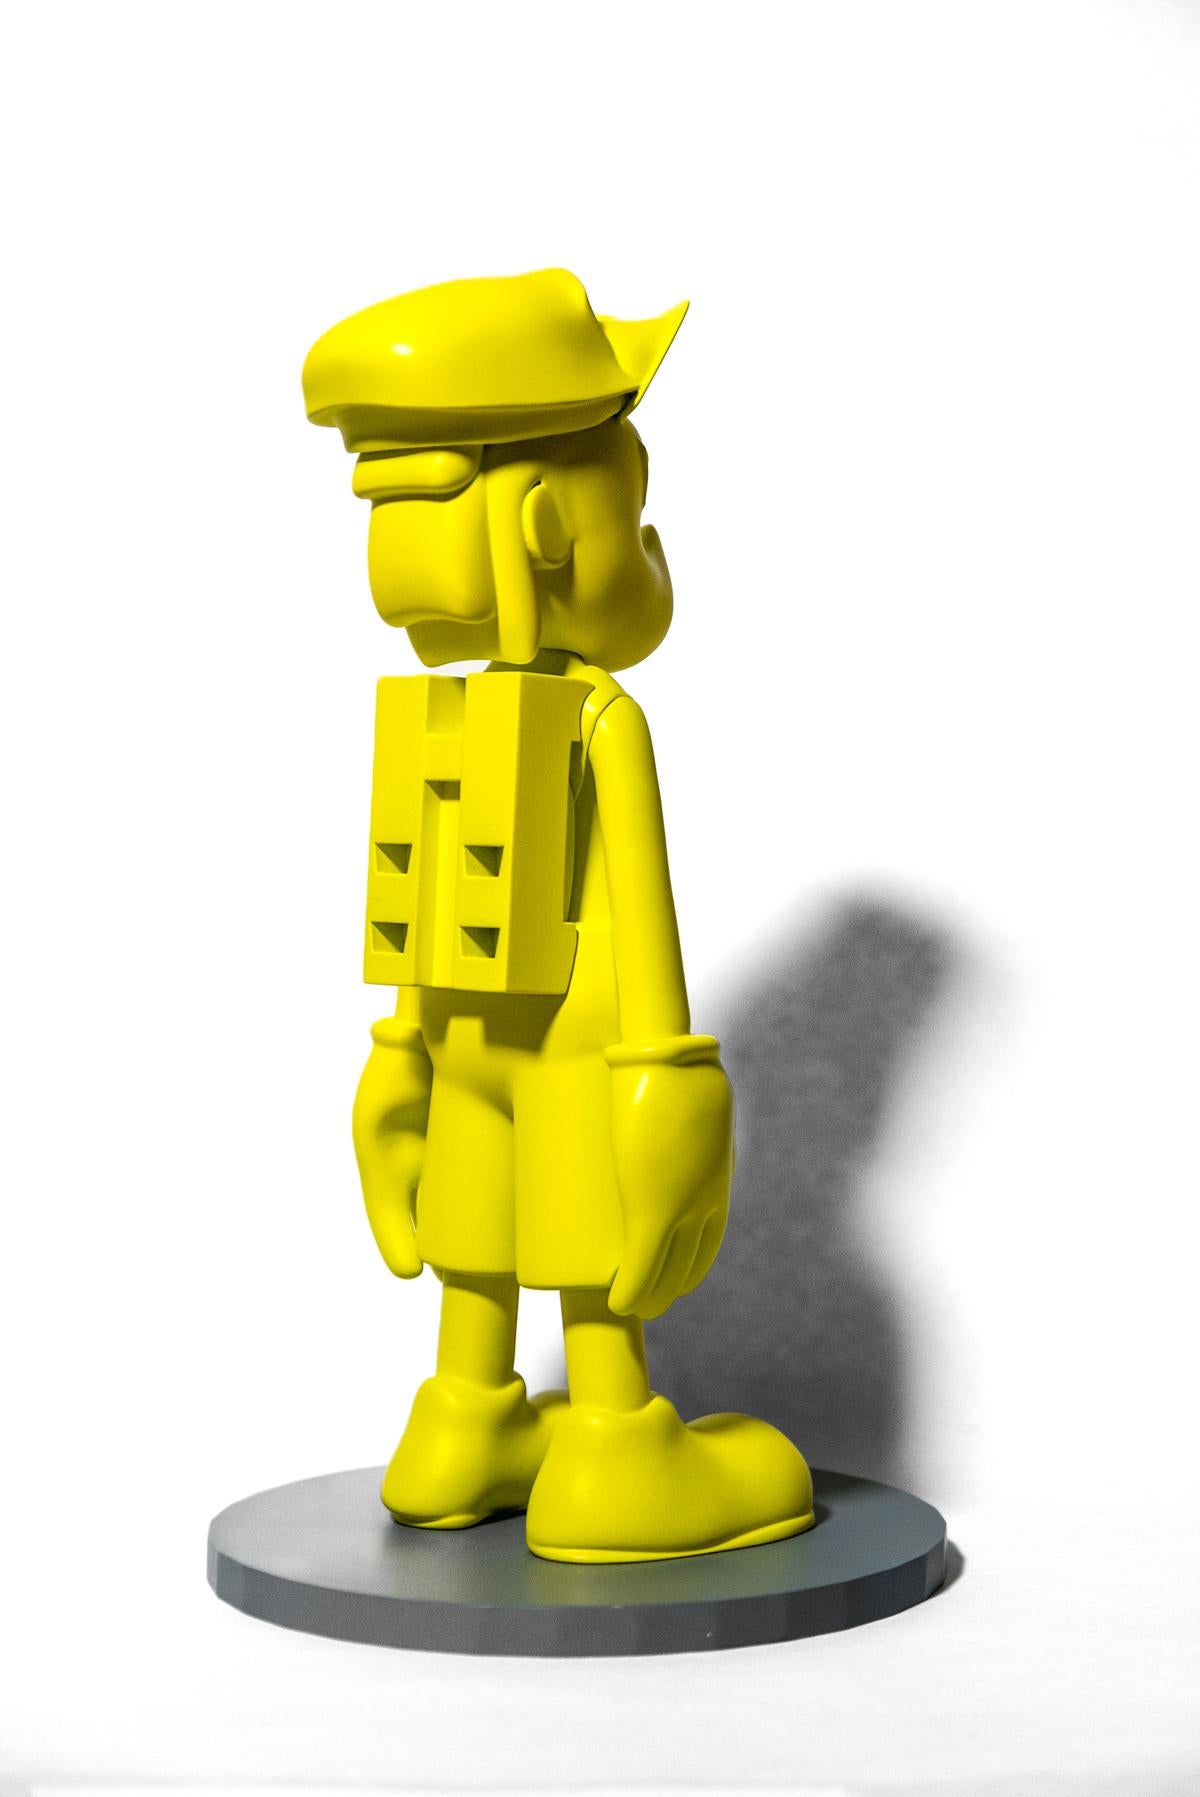 XOX Chill Yellow 1/10 - graphic, pop-art, figurative, resin sculpture - Pop Art Sculpture by Viktor Mitic